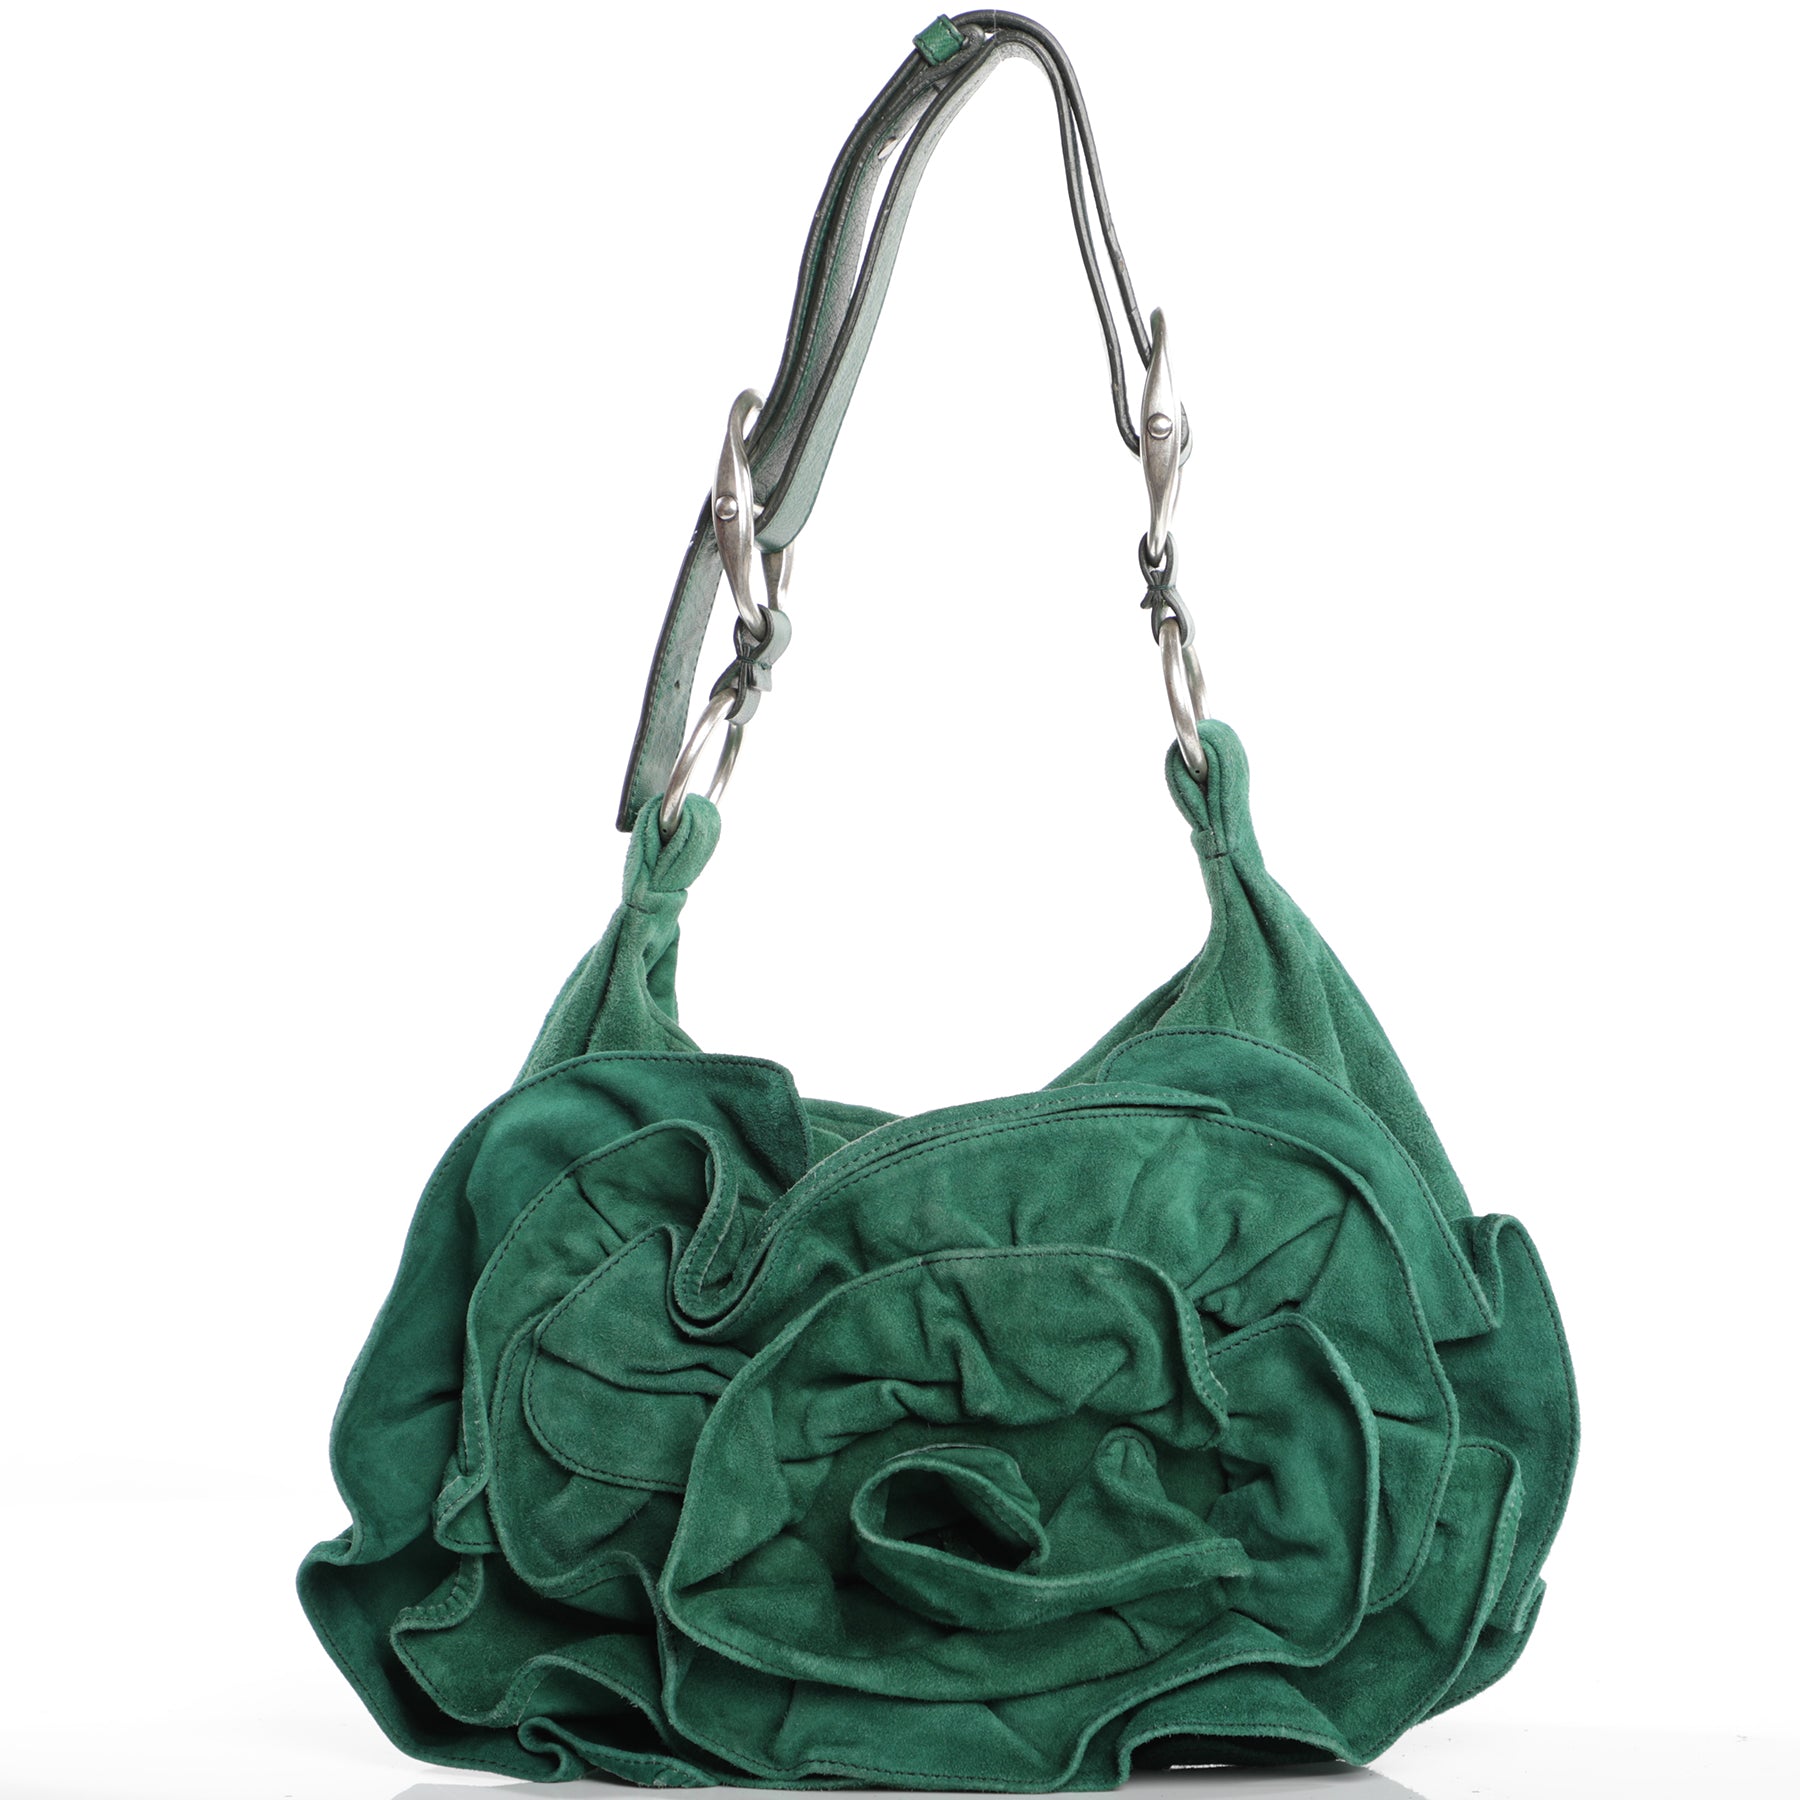 Yves Saint Laurent Handbags for sale in Bel-Air, Florida